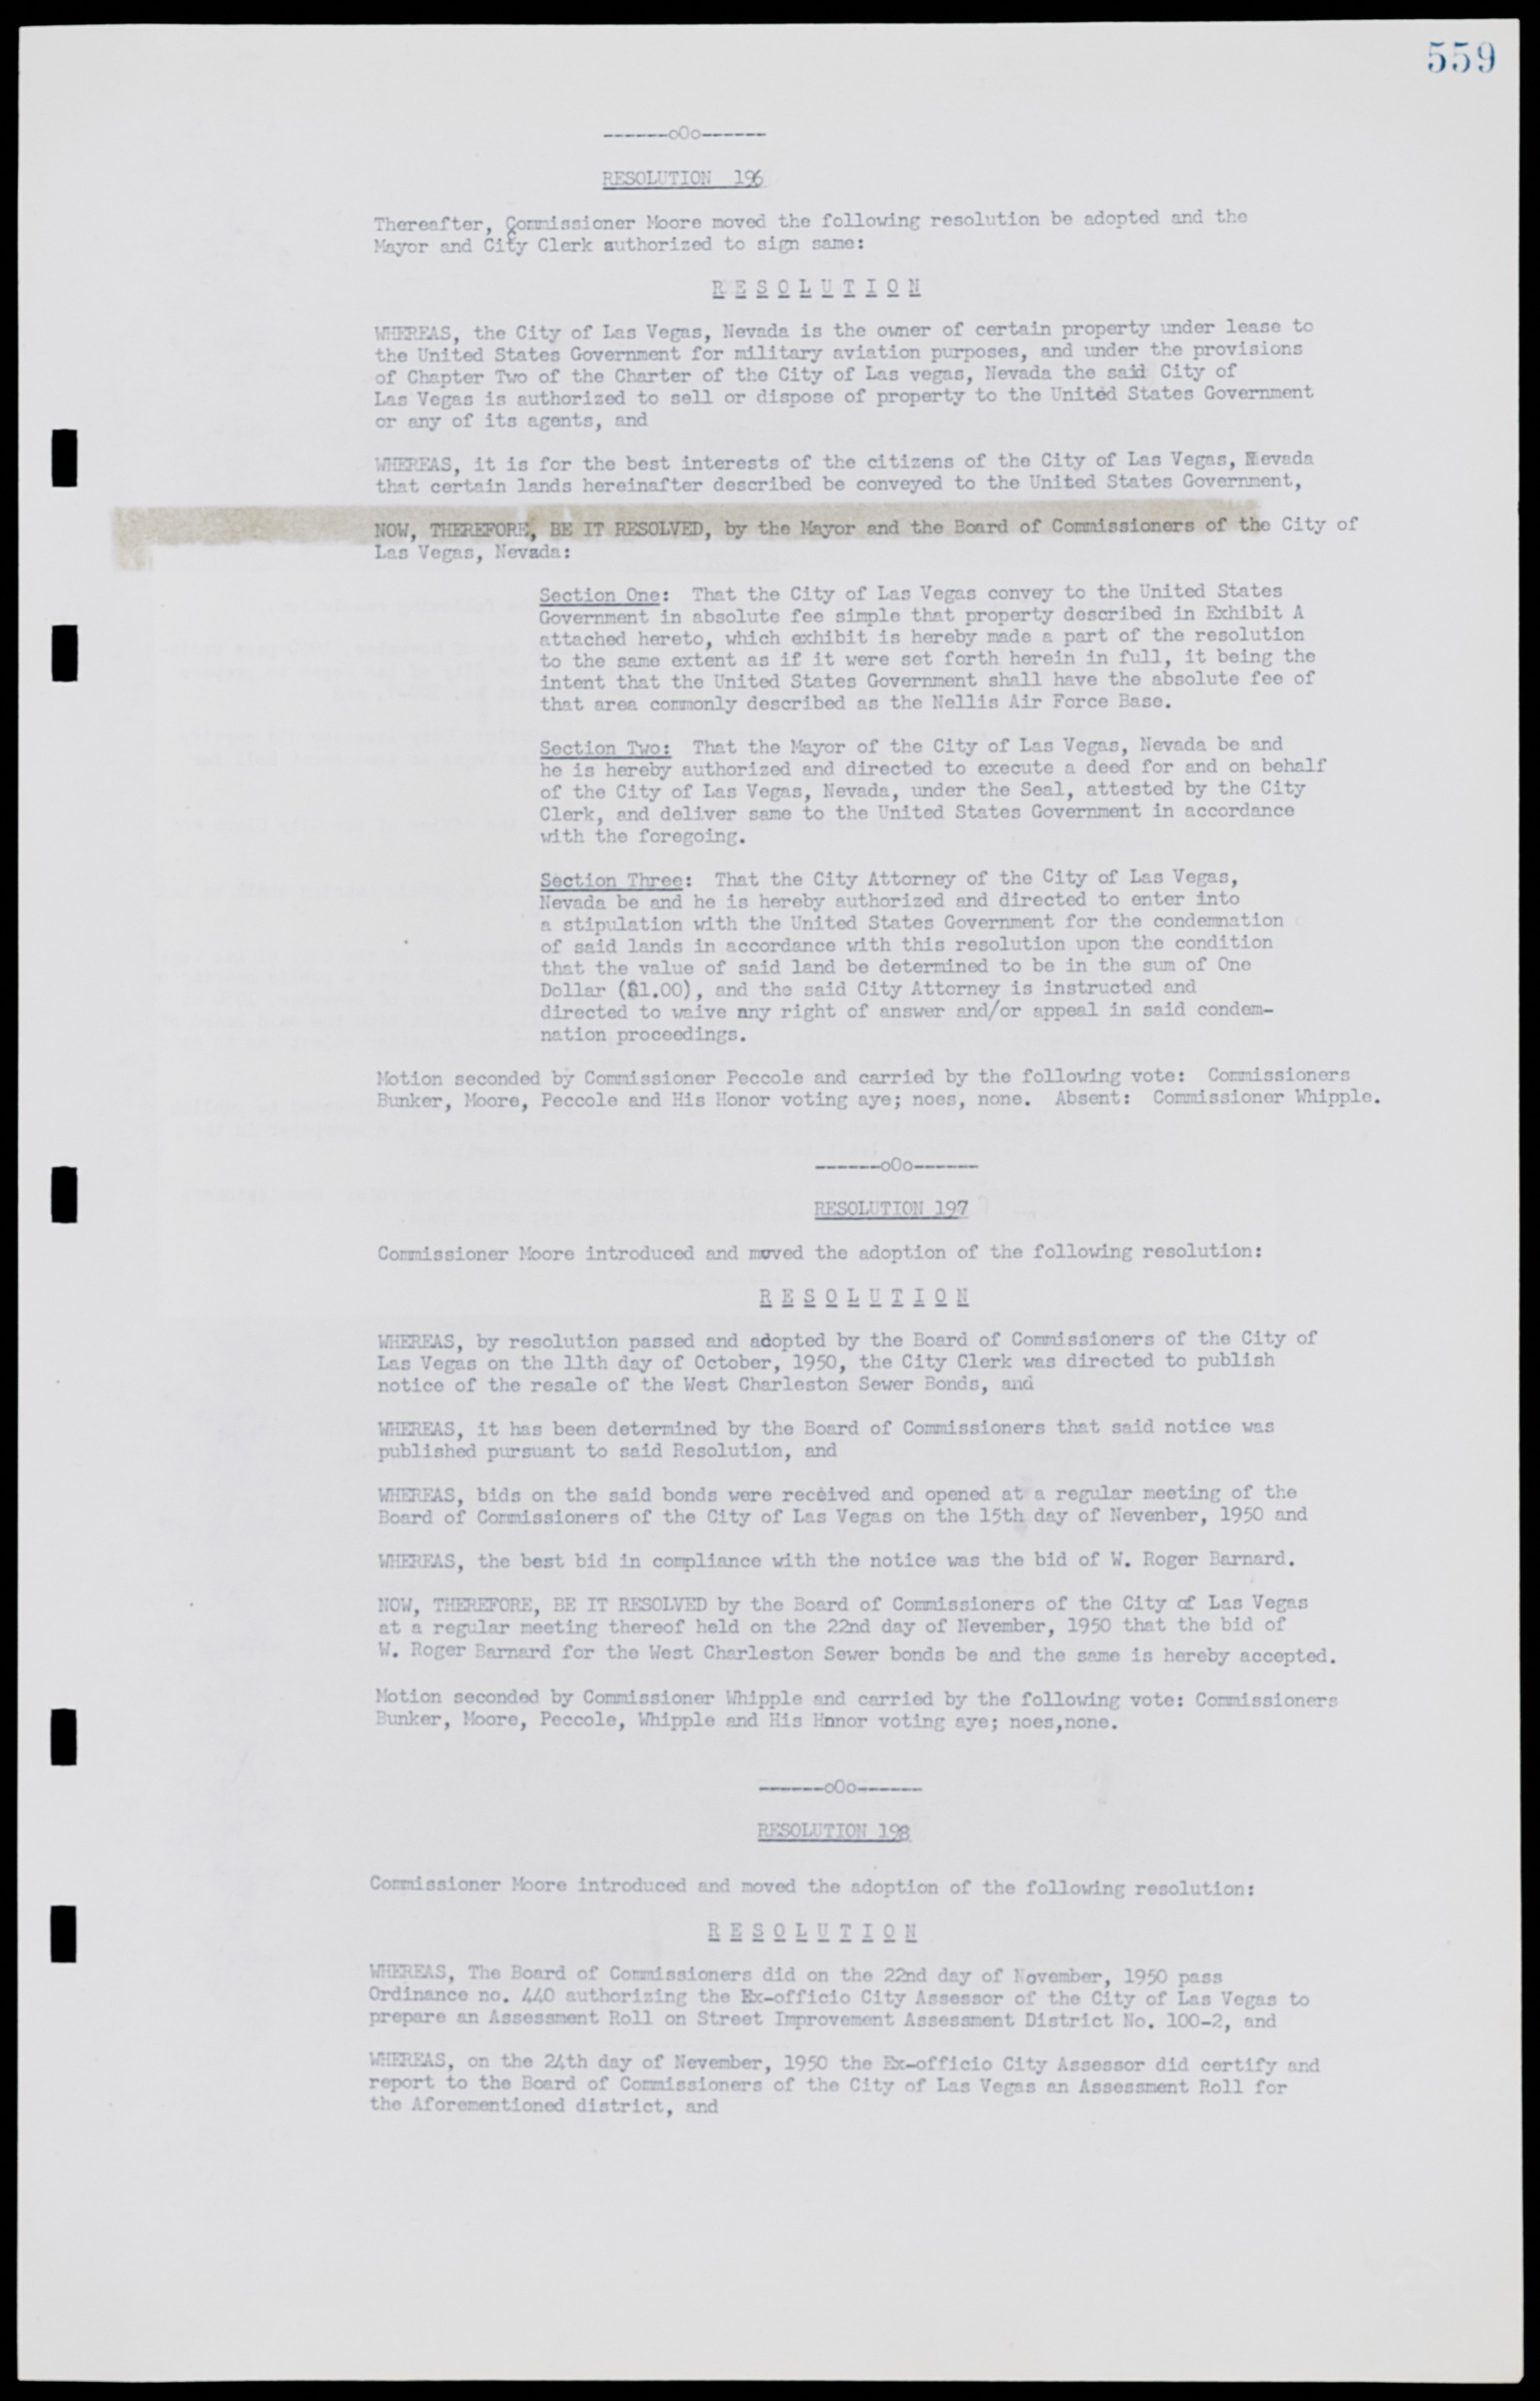 Las Vegas City Commission Minutes, January 7, 1947 to October 26, 1949, lvc000006-589